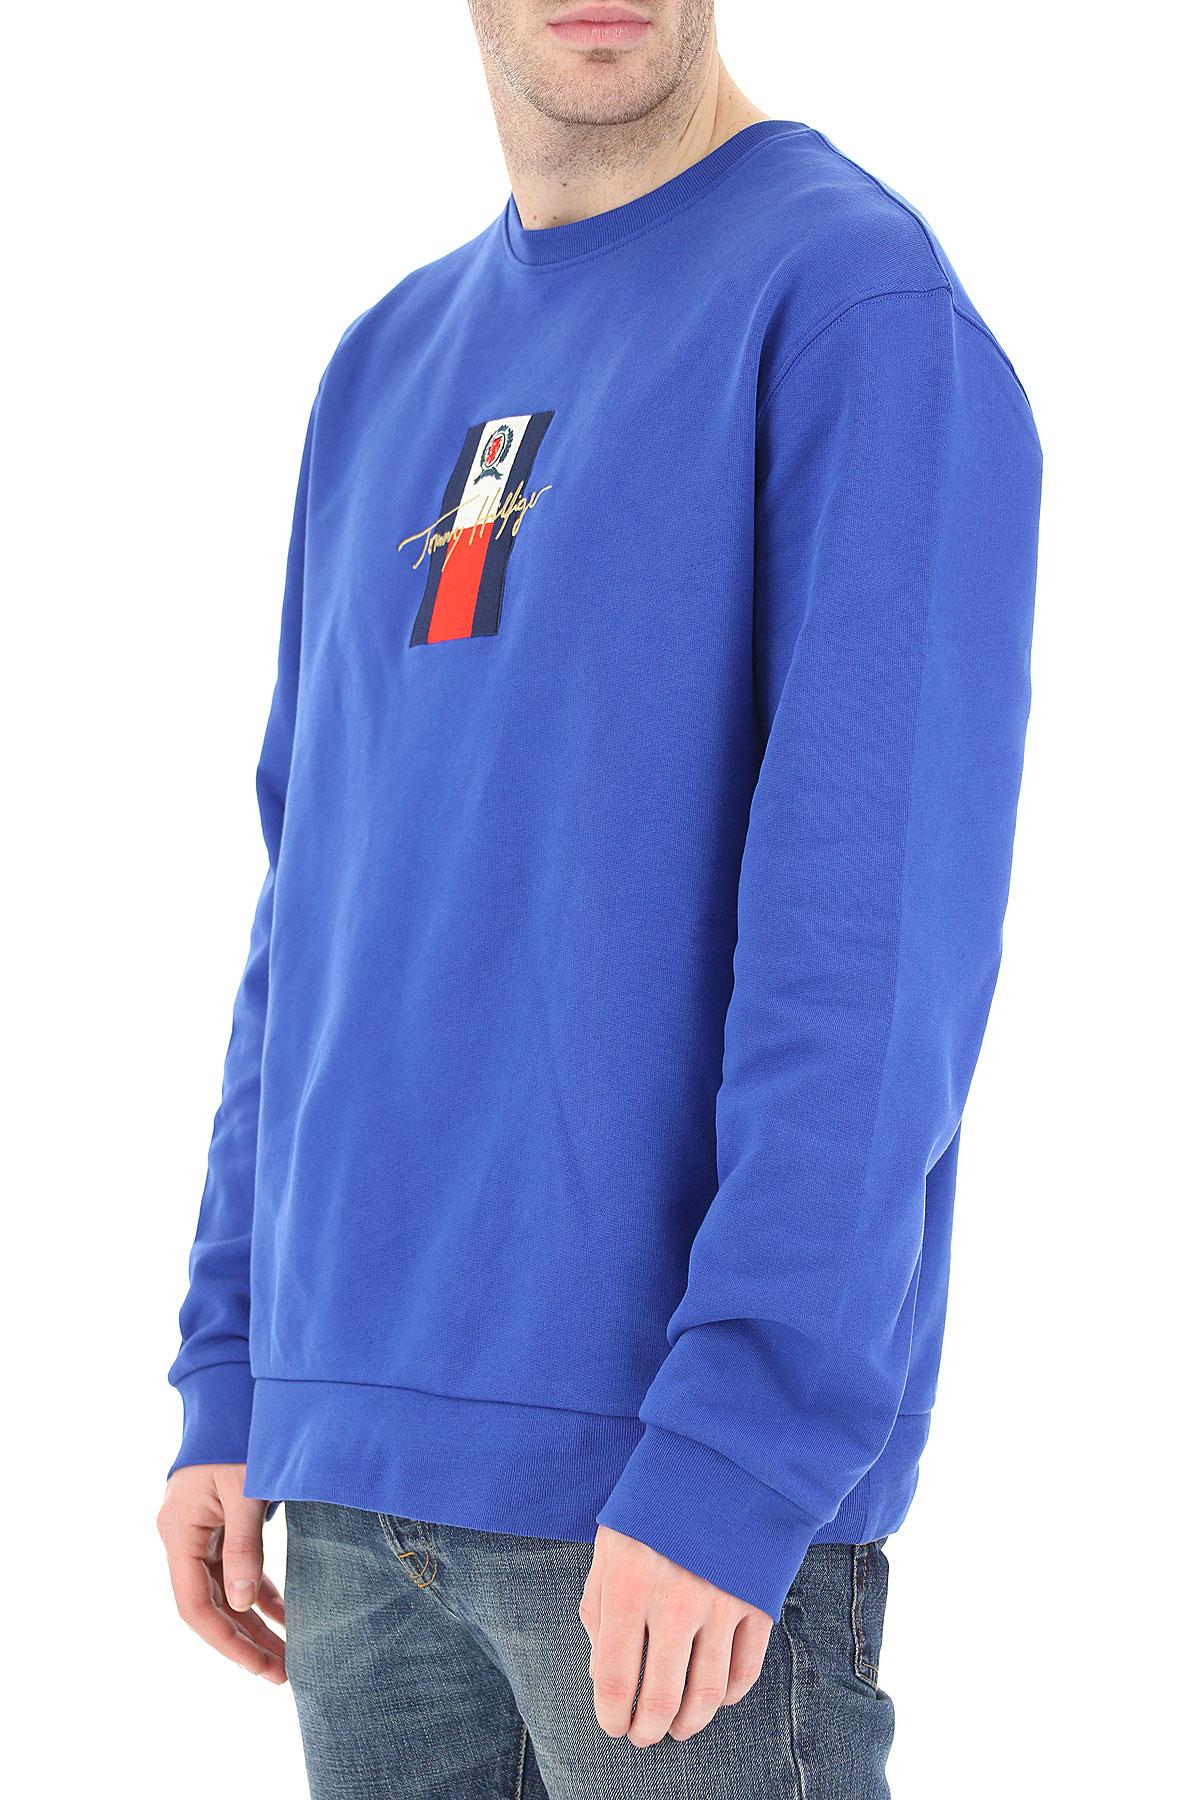 Tommy Hilfiger Cotton Sweatshirt For Men On Sale in Blue for Men - Lyst